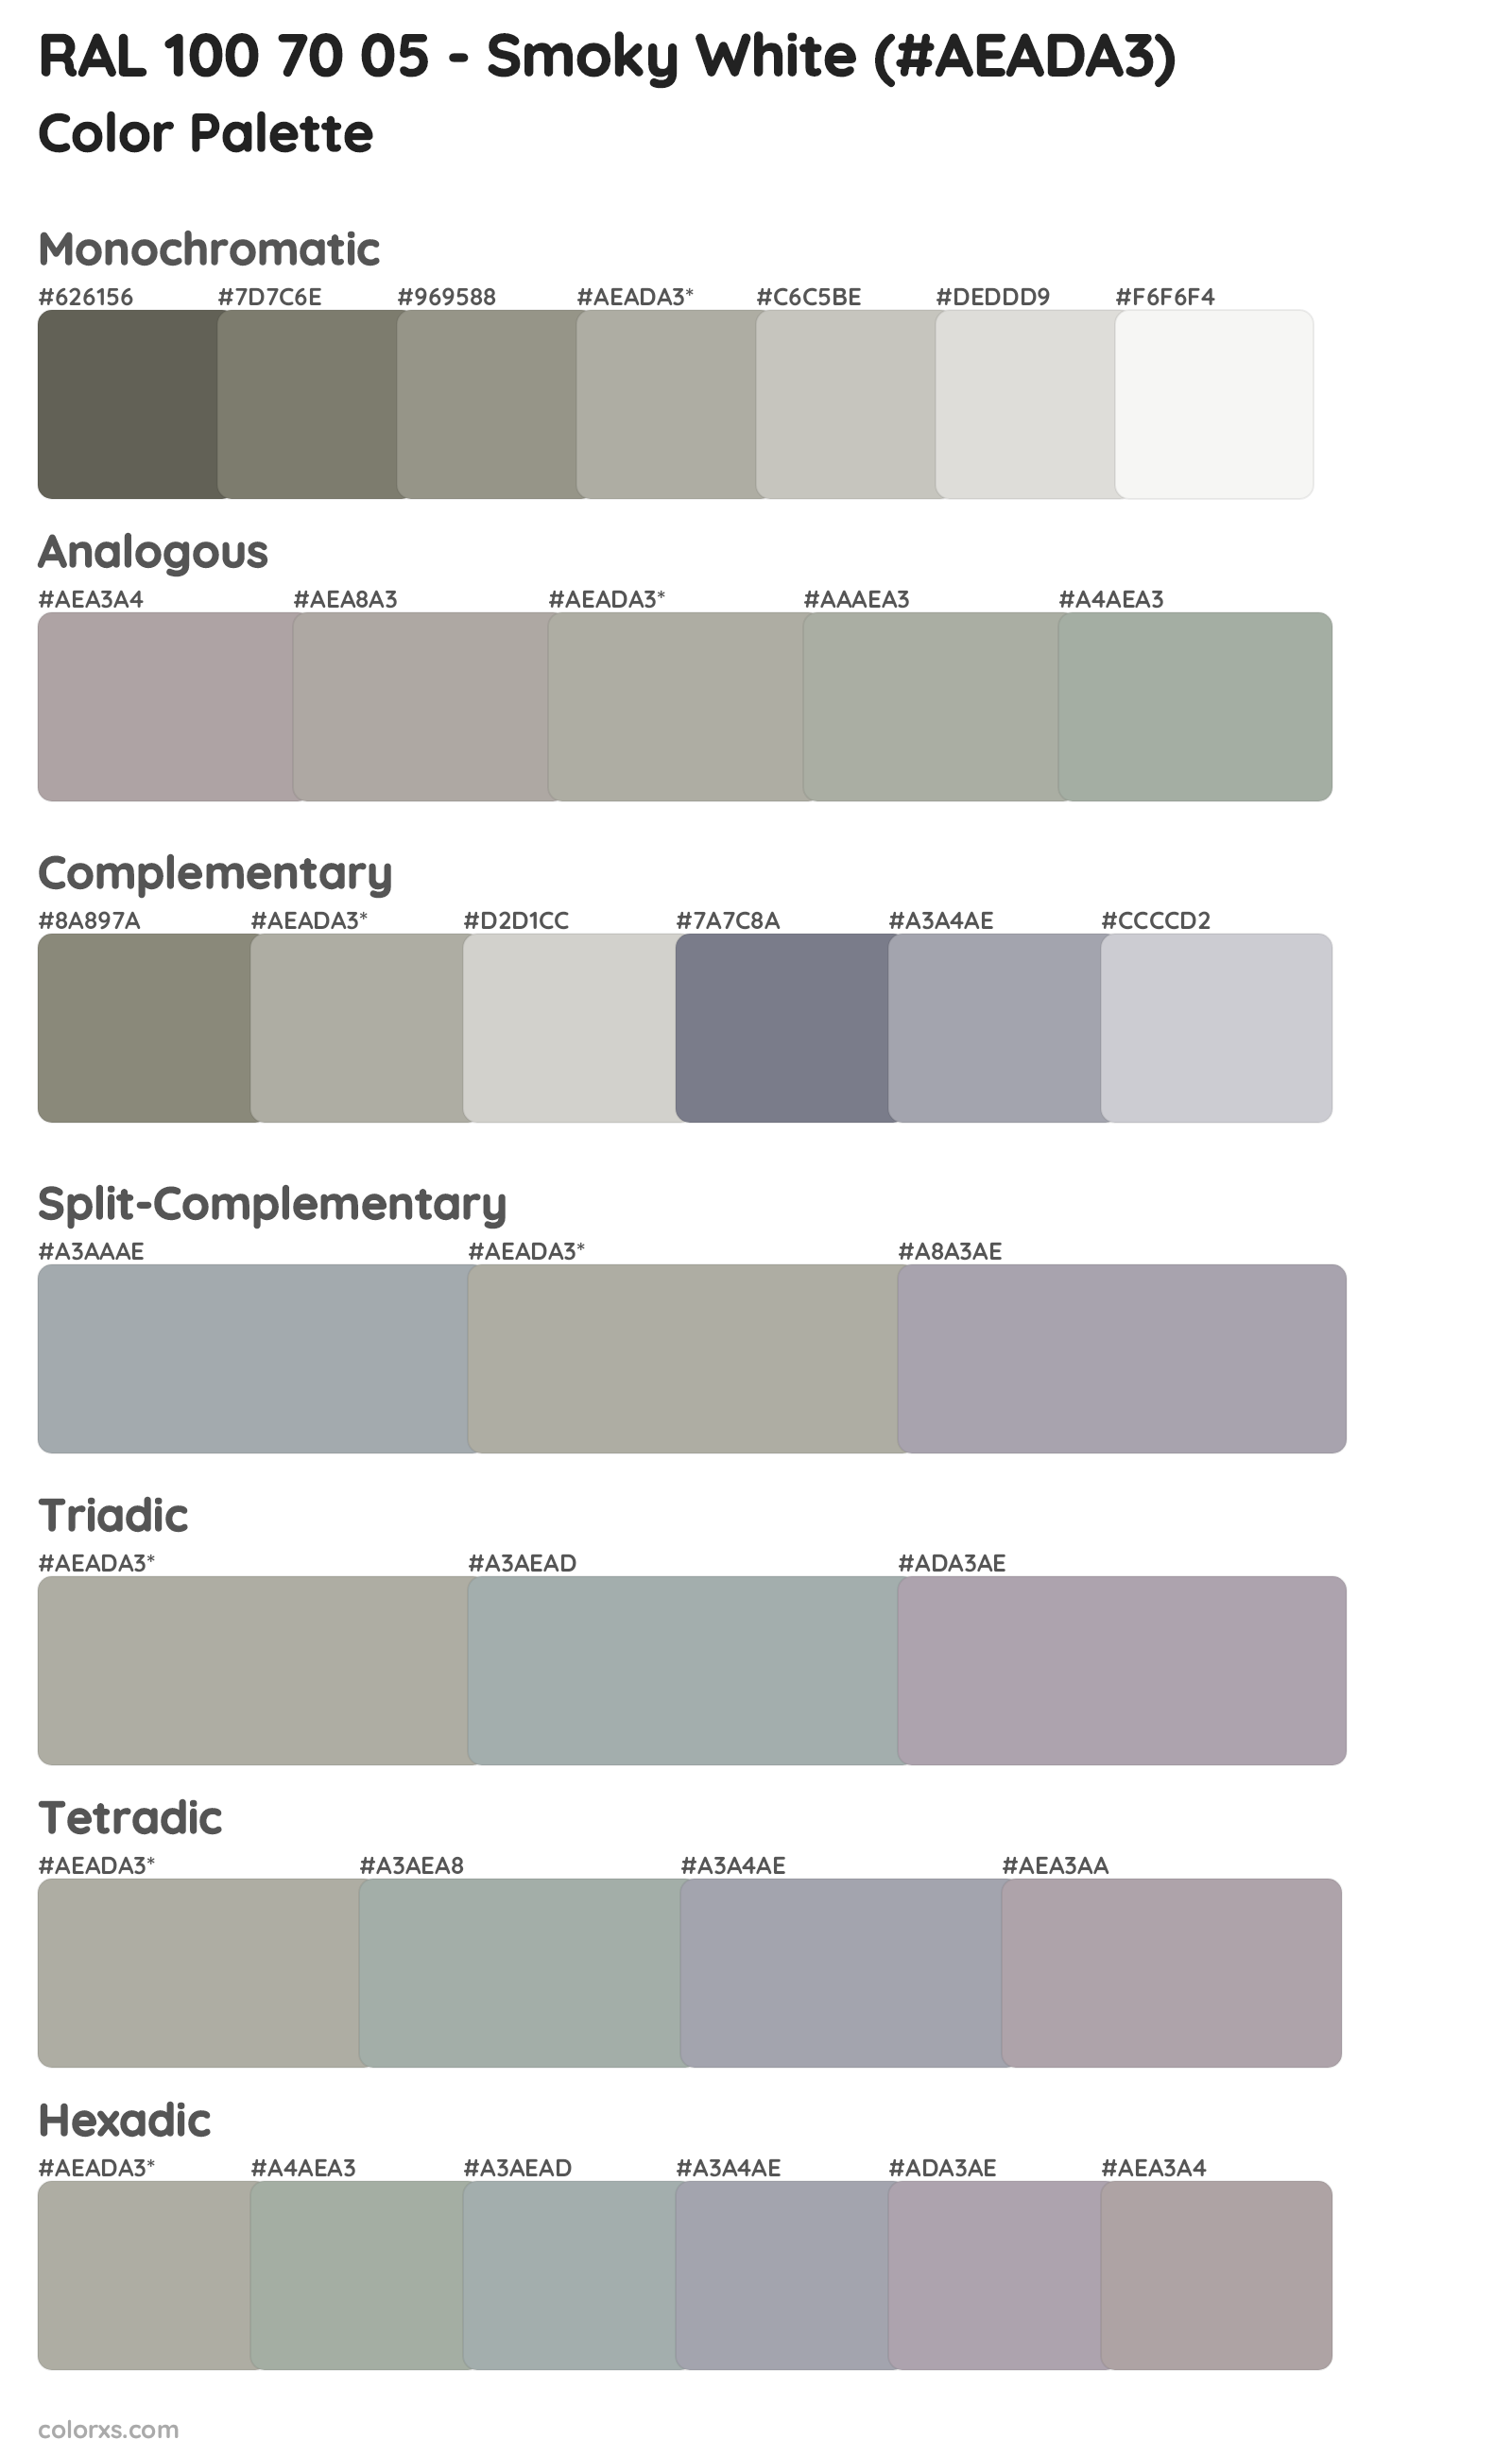 RAL 100 70 05 - Smoky White Color Scheme Palettes